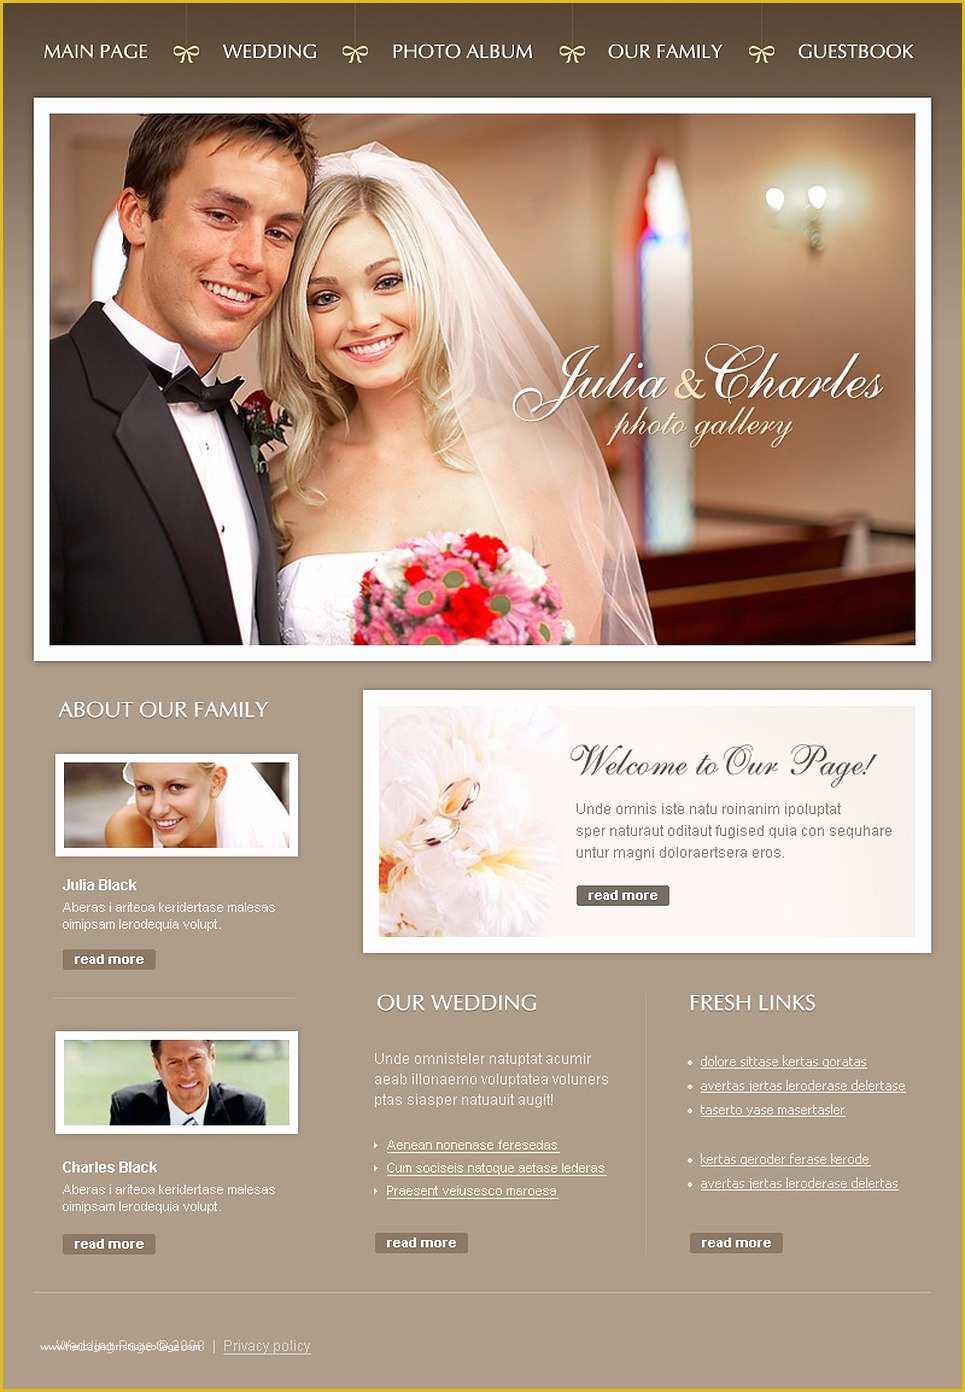 Free Wedding Website Templates Of Wedding Album Website Template